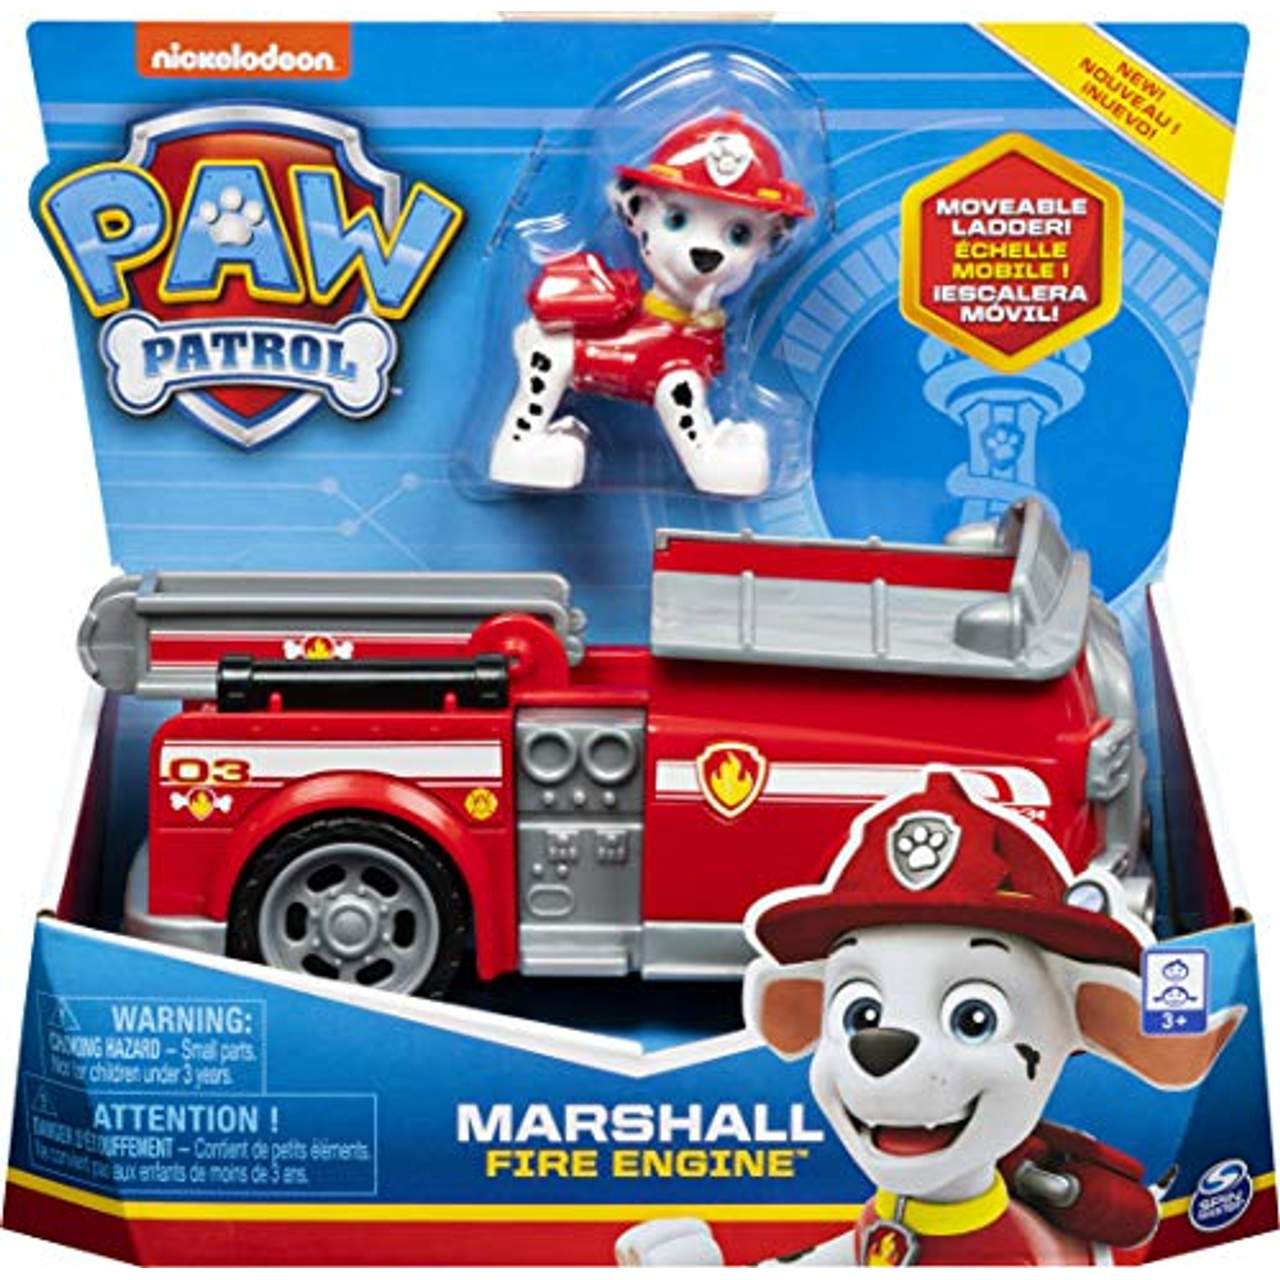 PAW Patrol 6052310 Marshall Feuerwehrfahrzeug und Figur